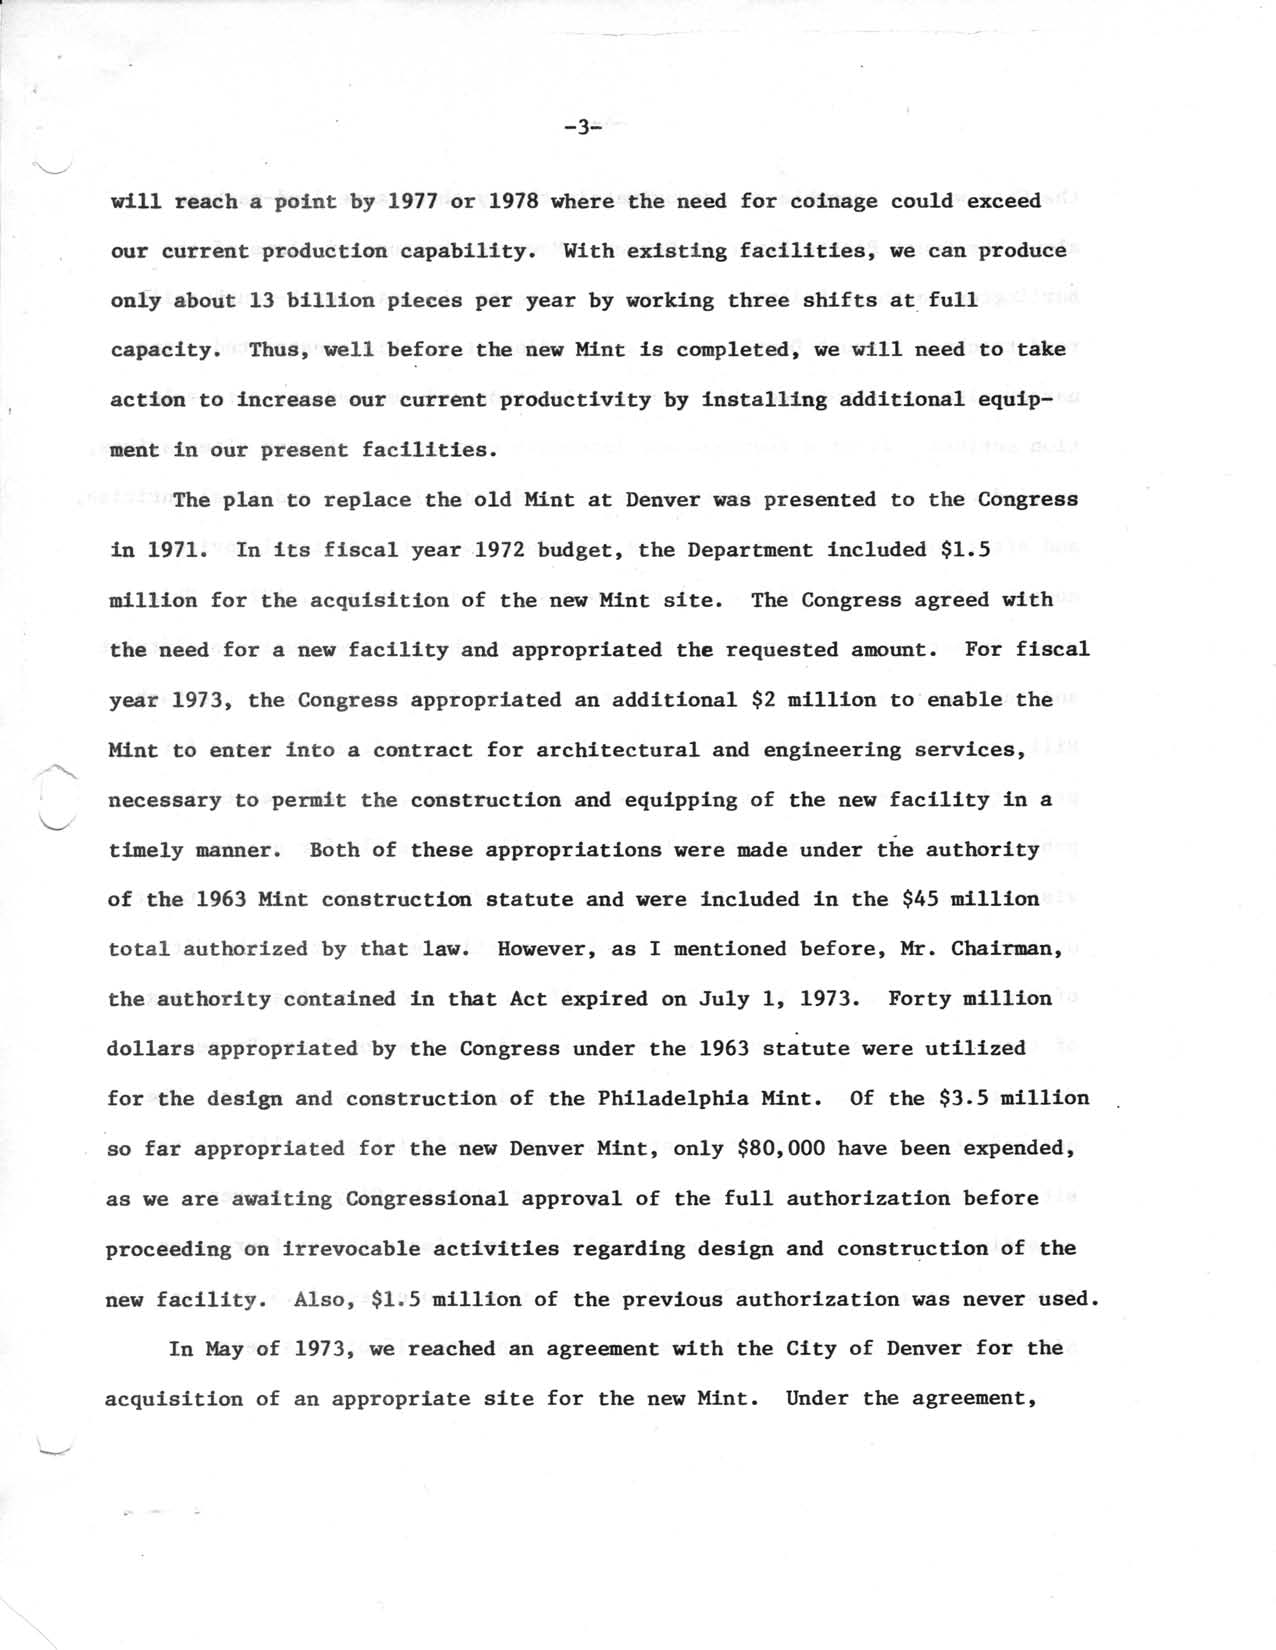 Historic Press Release: Brooks' Statement New Denver Mint, Page 3